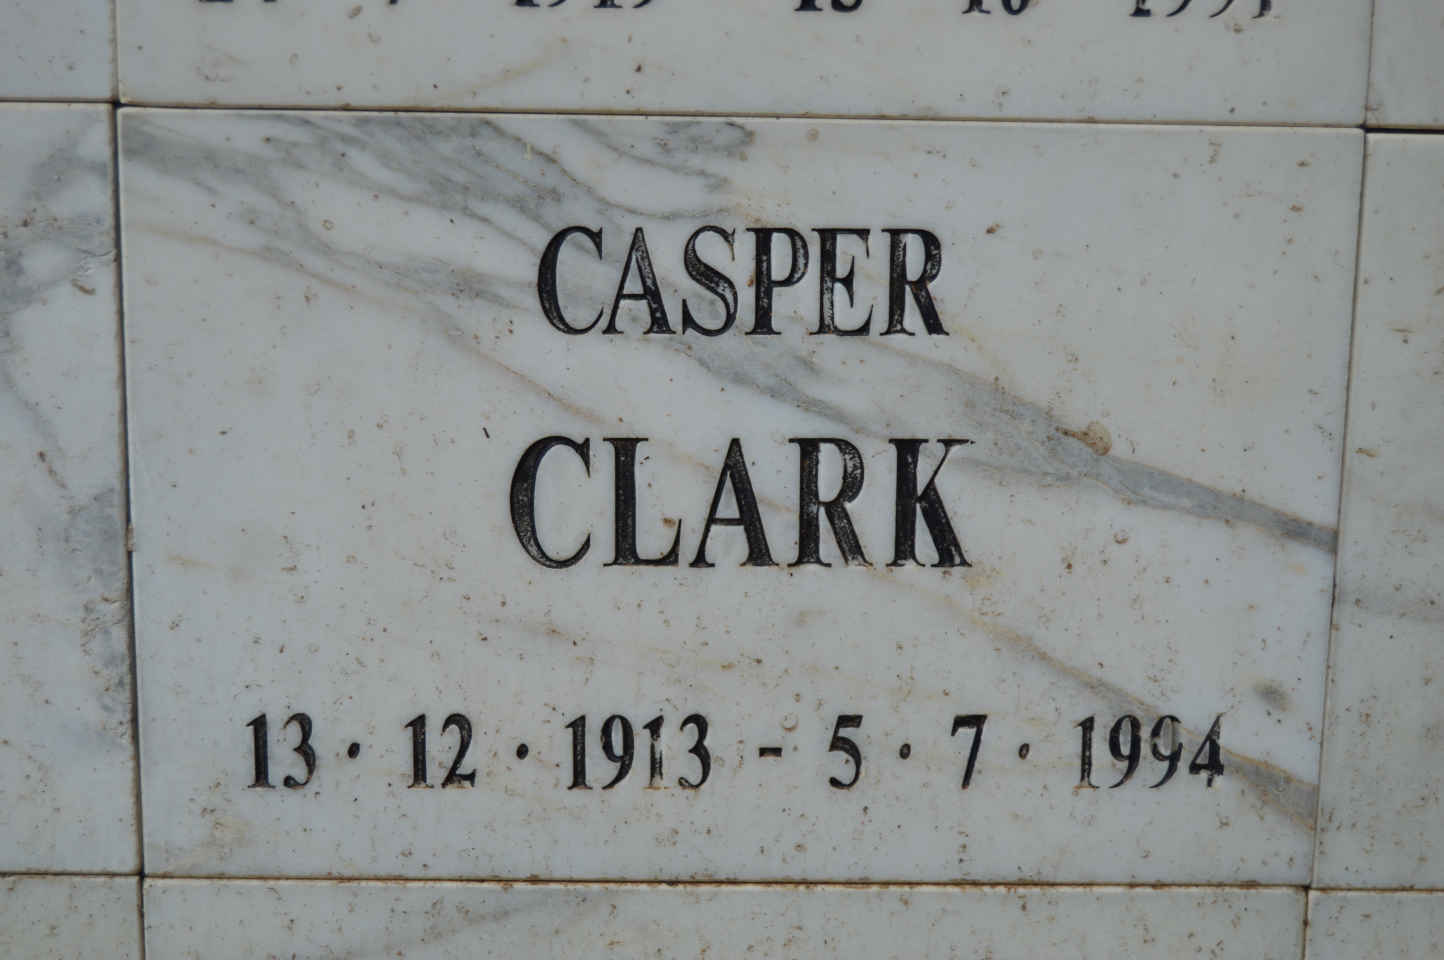 CLARK Casper 1913-1994